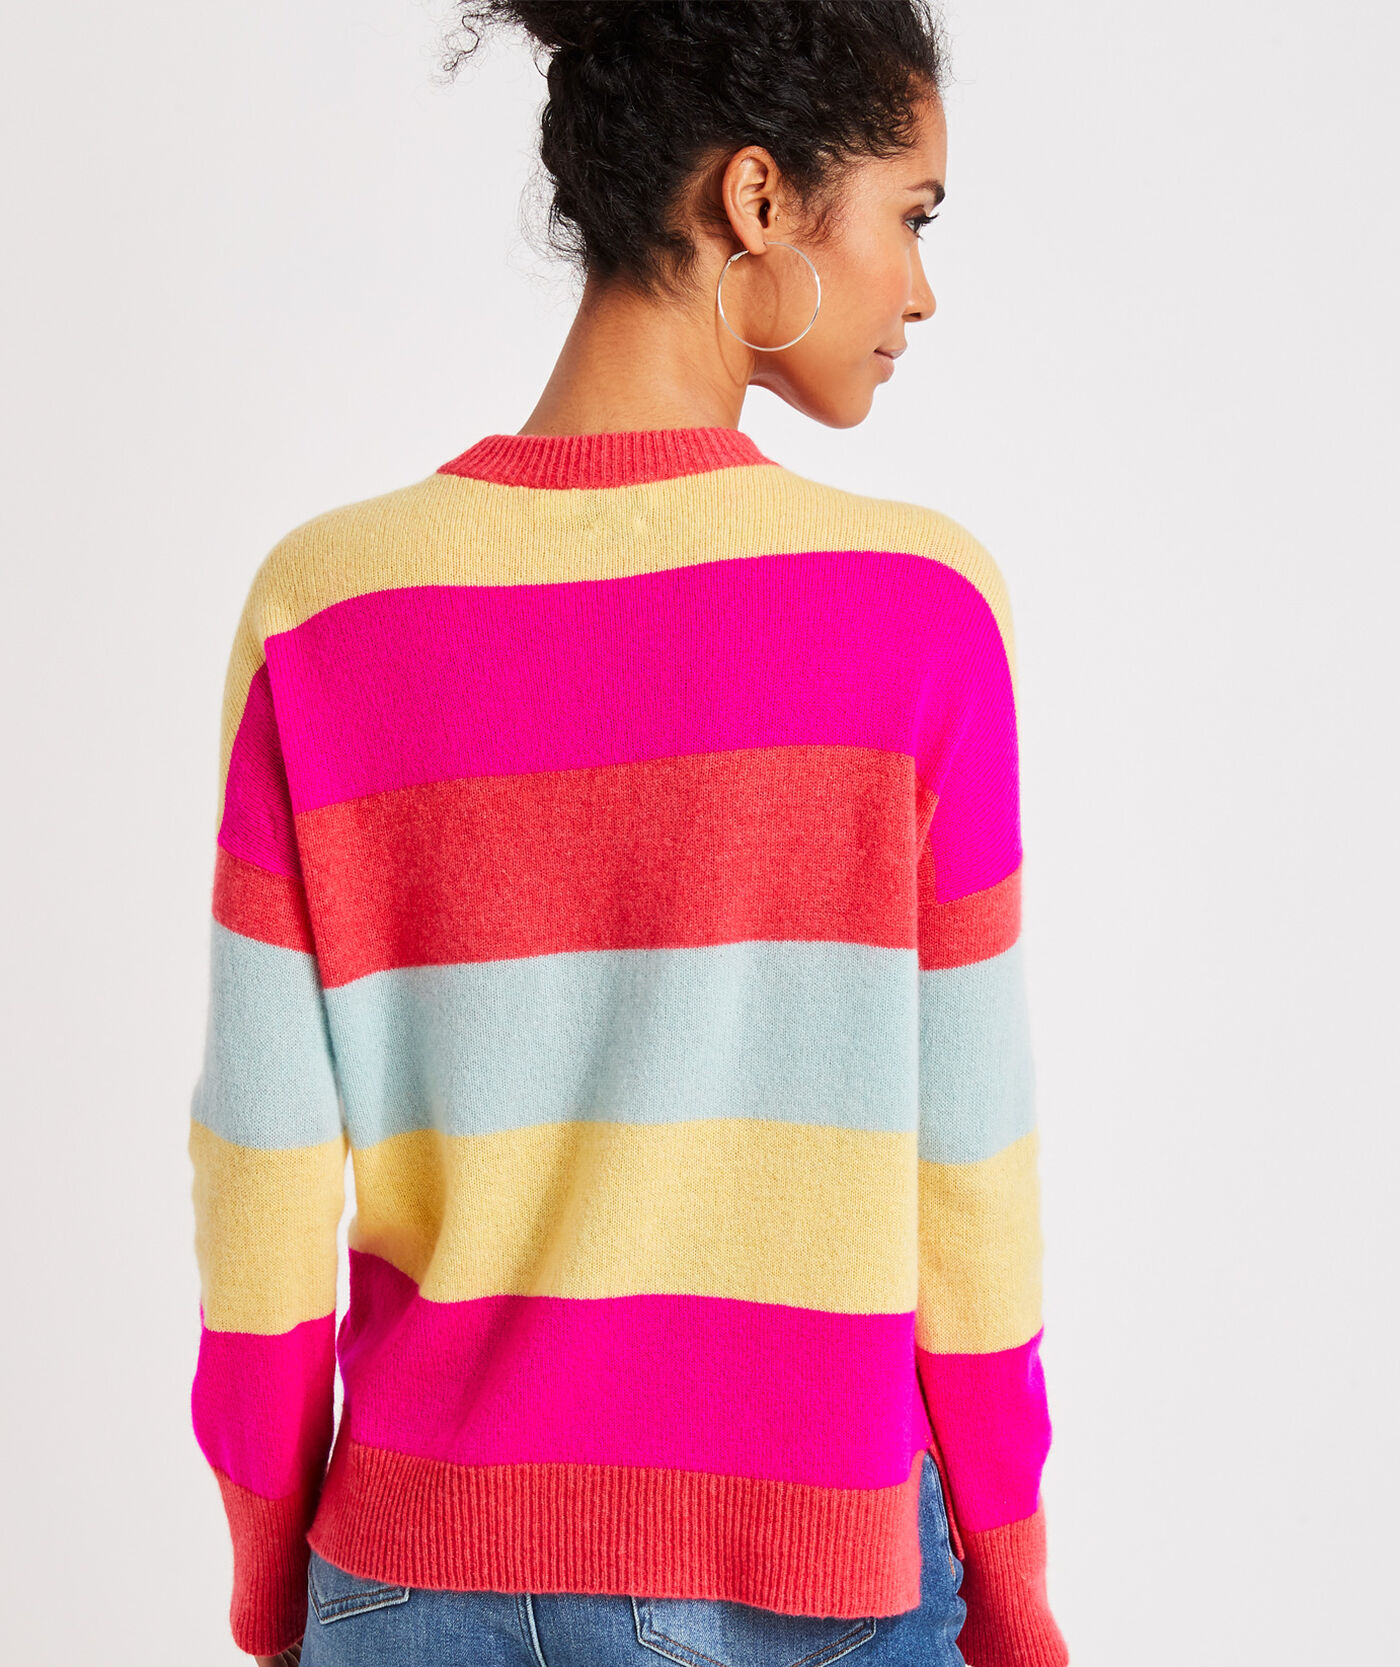 Shop Seaspun Lightweight Cashmere Bright Stripe Sweater at vineyard vines